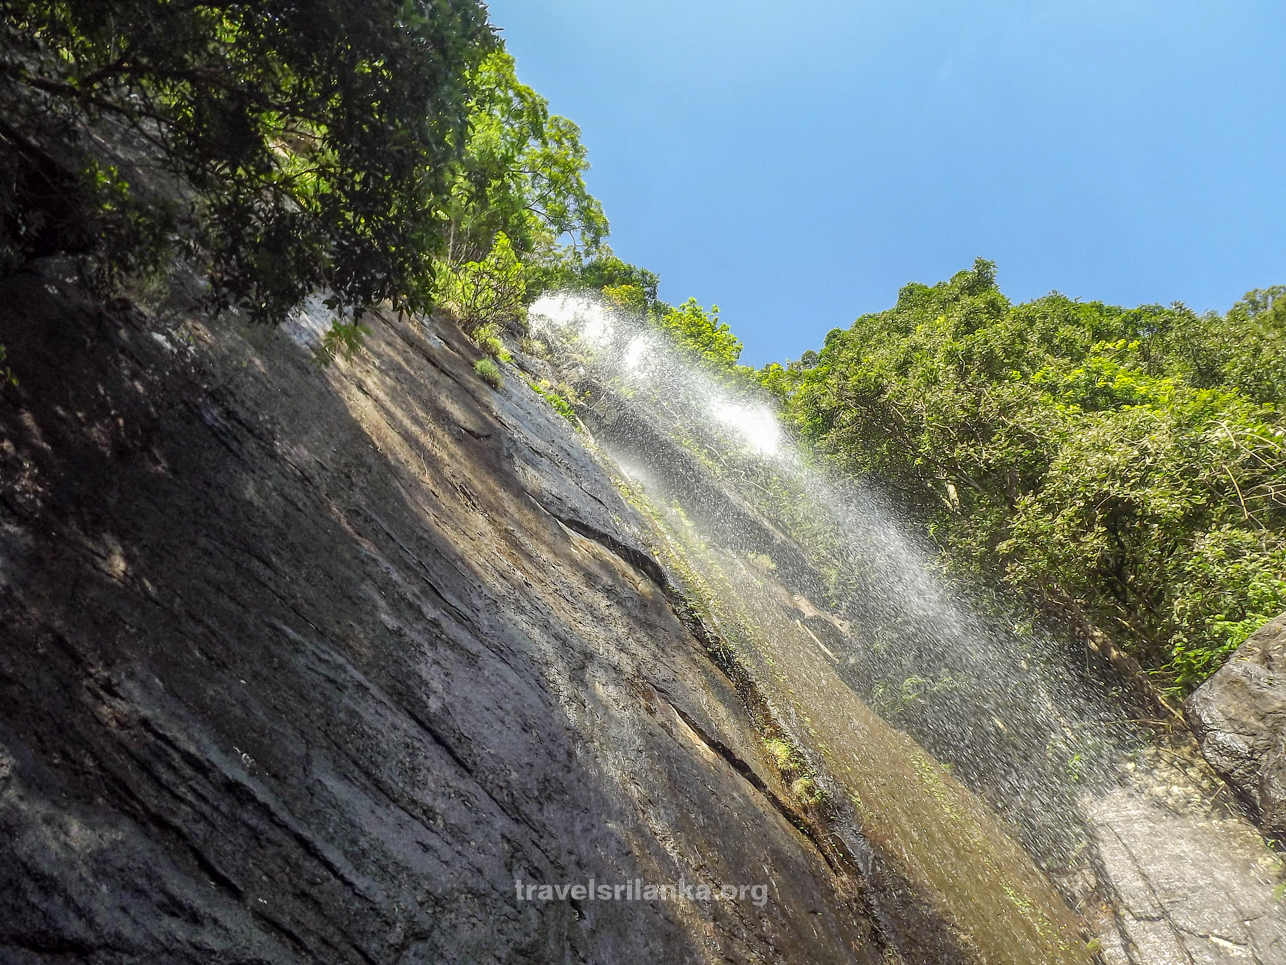 TravelSrilanka.org - Kombakadulla falls in knuckles